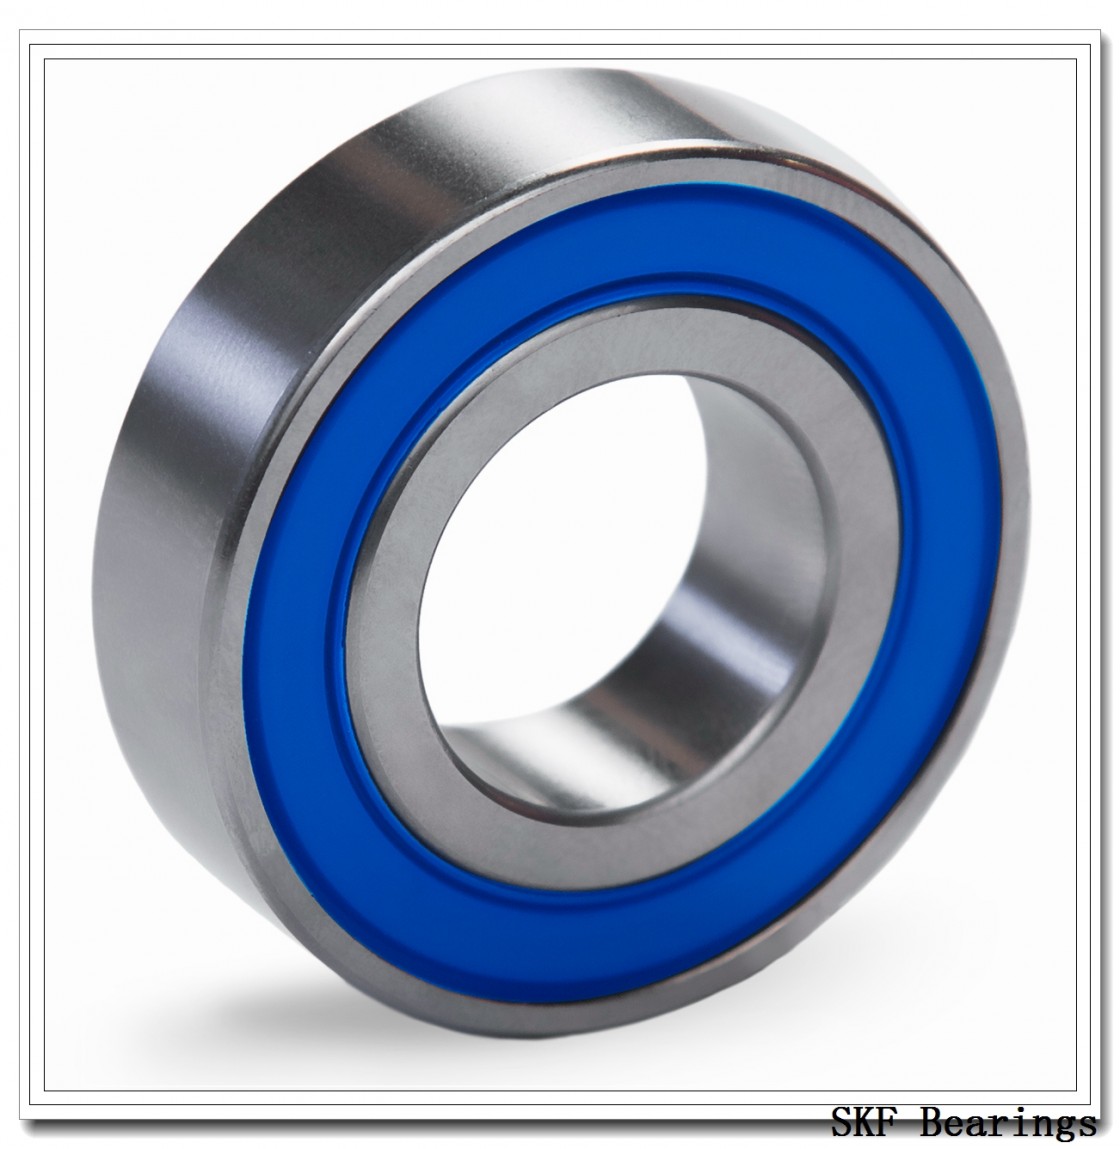 10 mm x 26 mm x 8 mm  SKF 7000 CD/HCP4A angular contact ball bearings